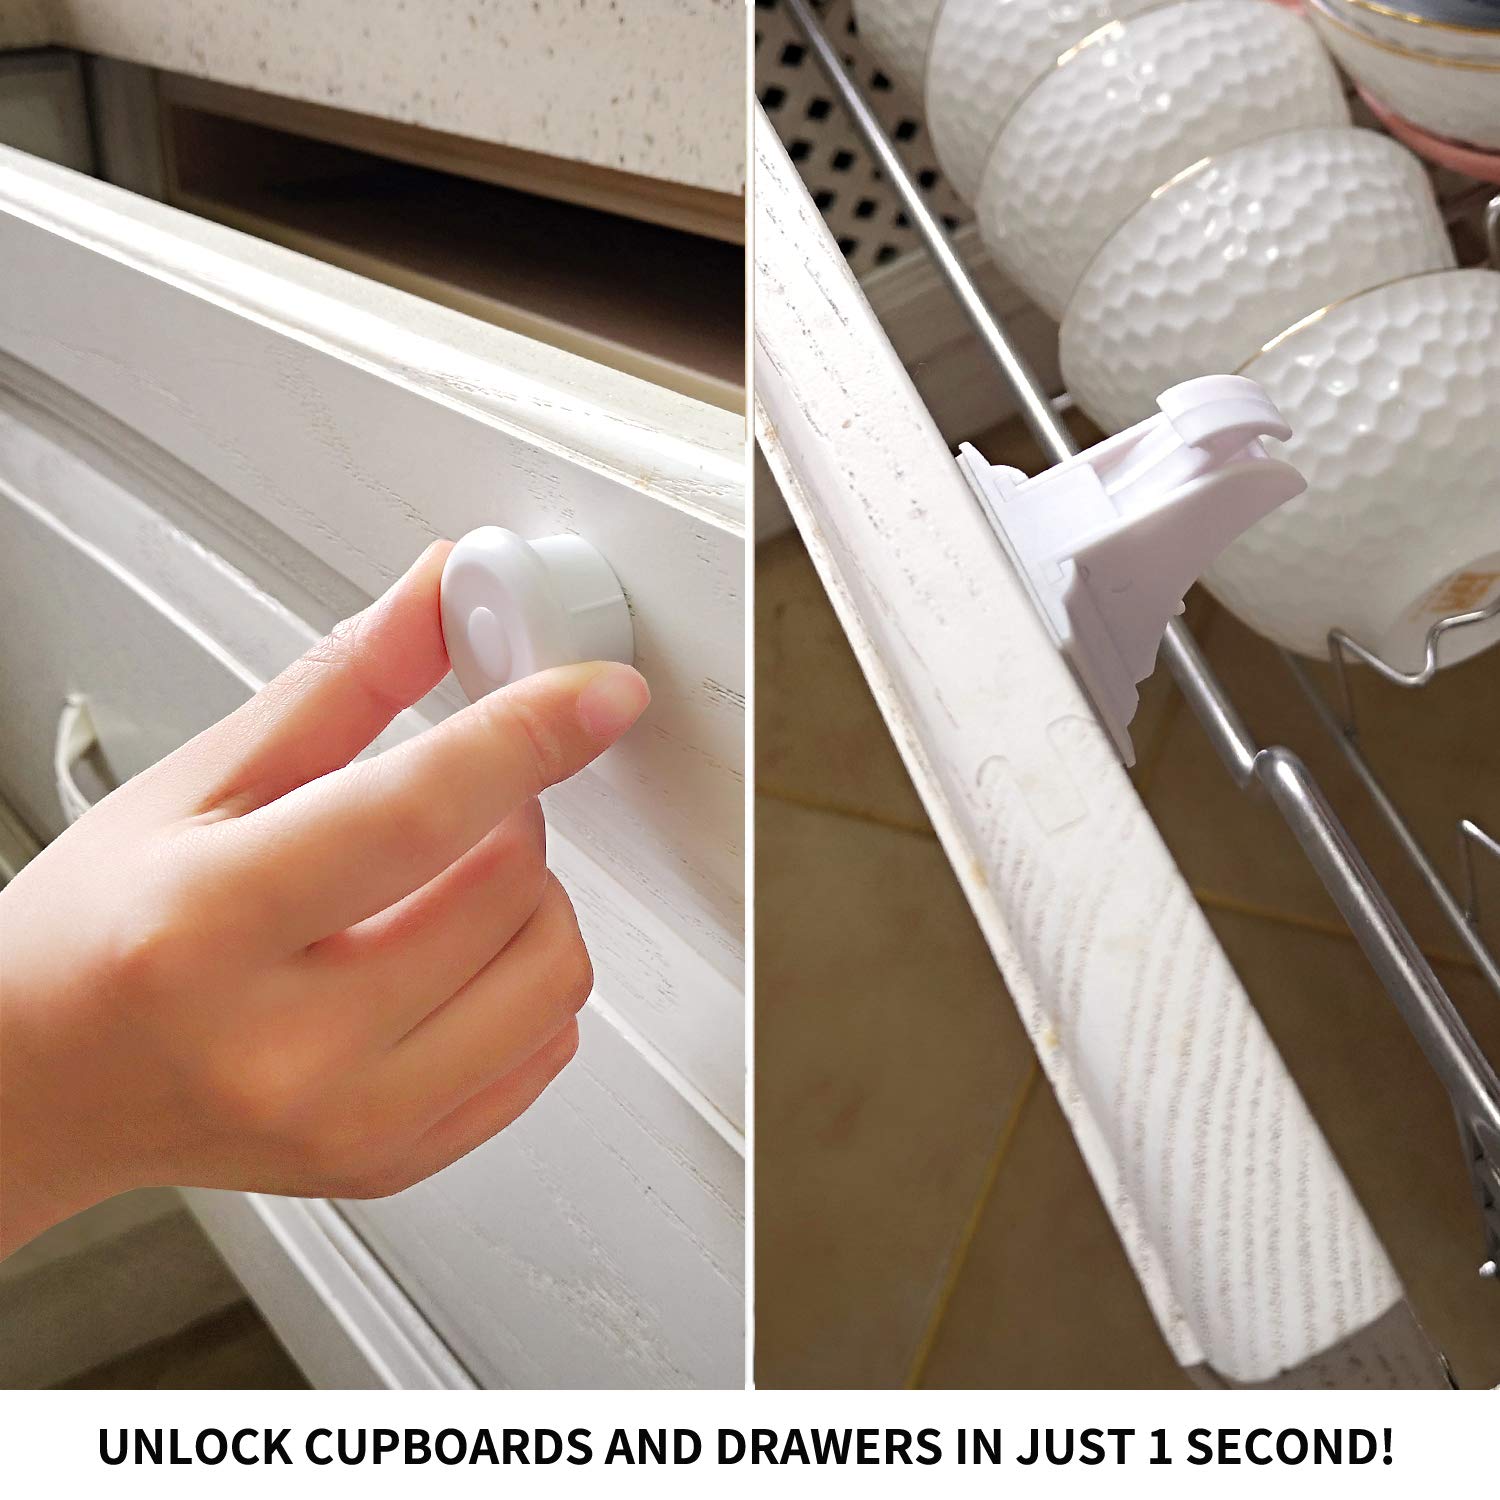 Baby Proofing Magnetic Cabinet Locks Child Safety - Norjews (3 Keys+20 Locks),  C